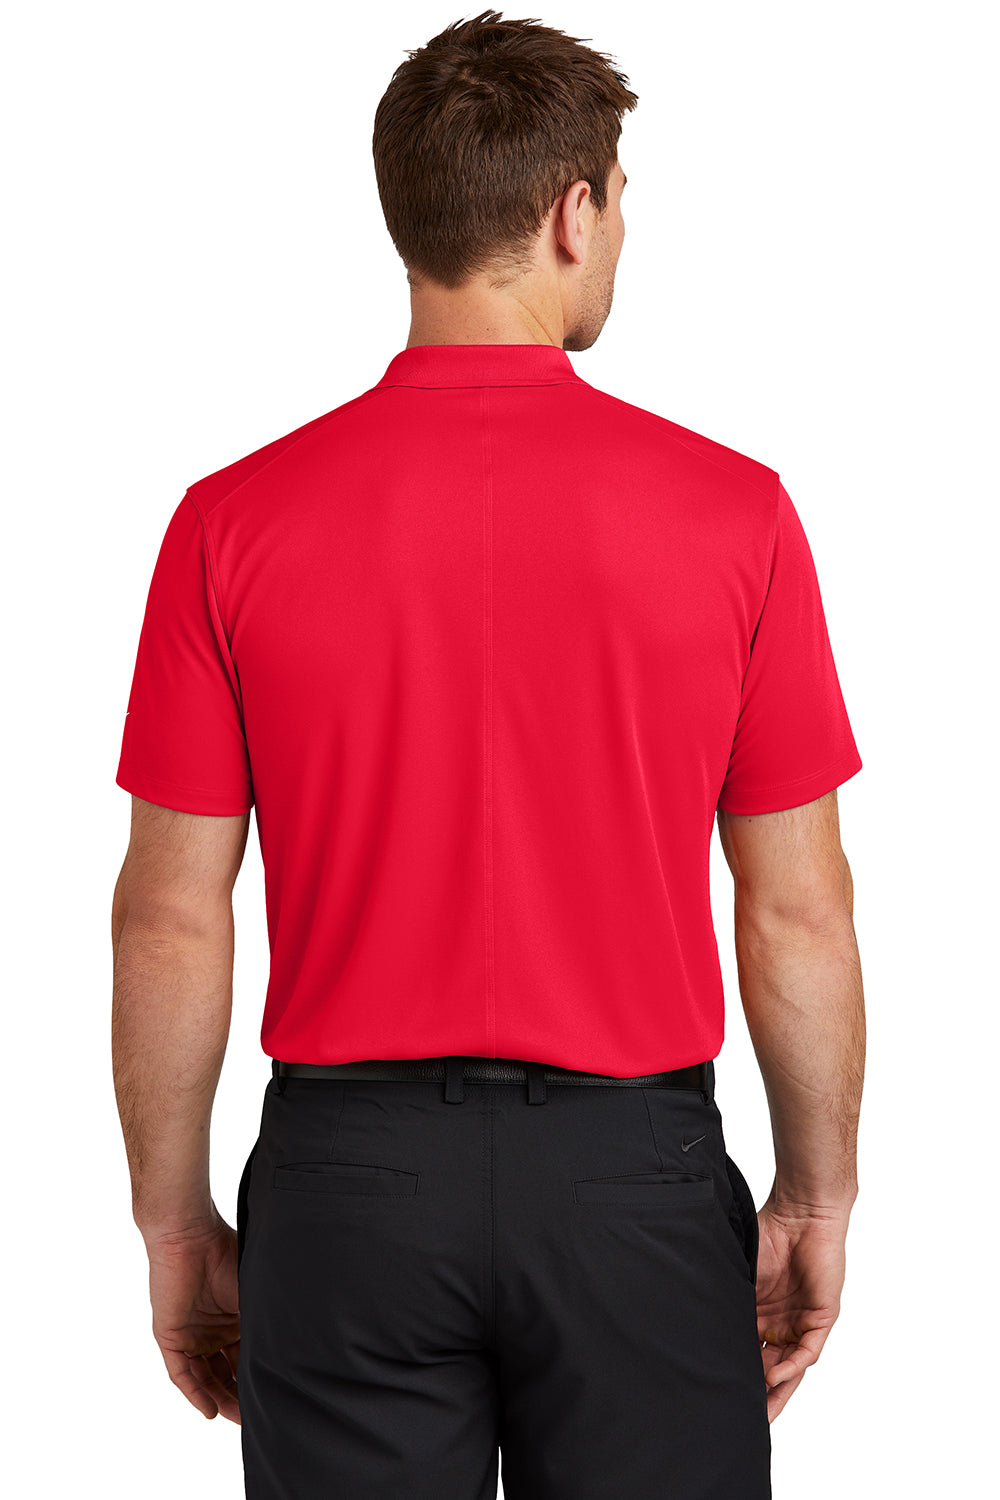 Nike NKDX6684 Mens Victory Dri-Fit Moisture Wicking Short Sleeve Polo Shirt University Red Model Back